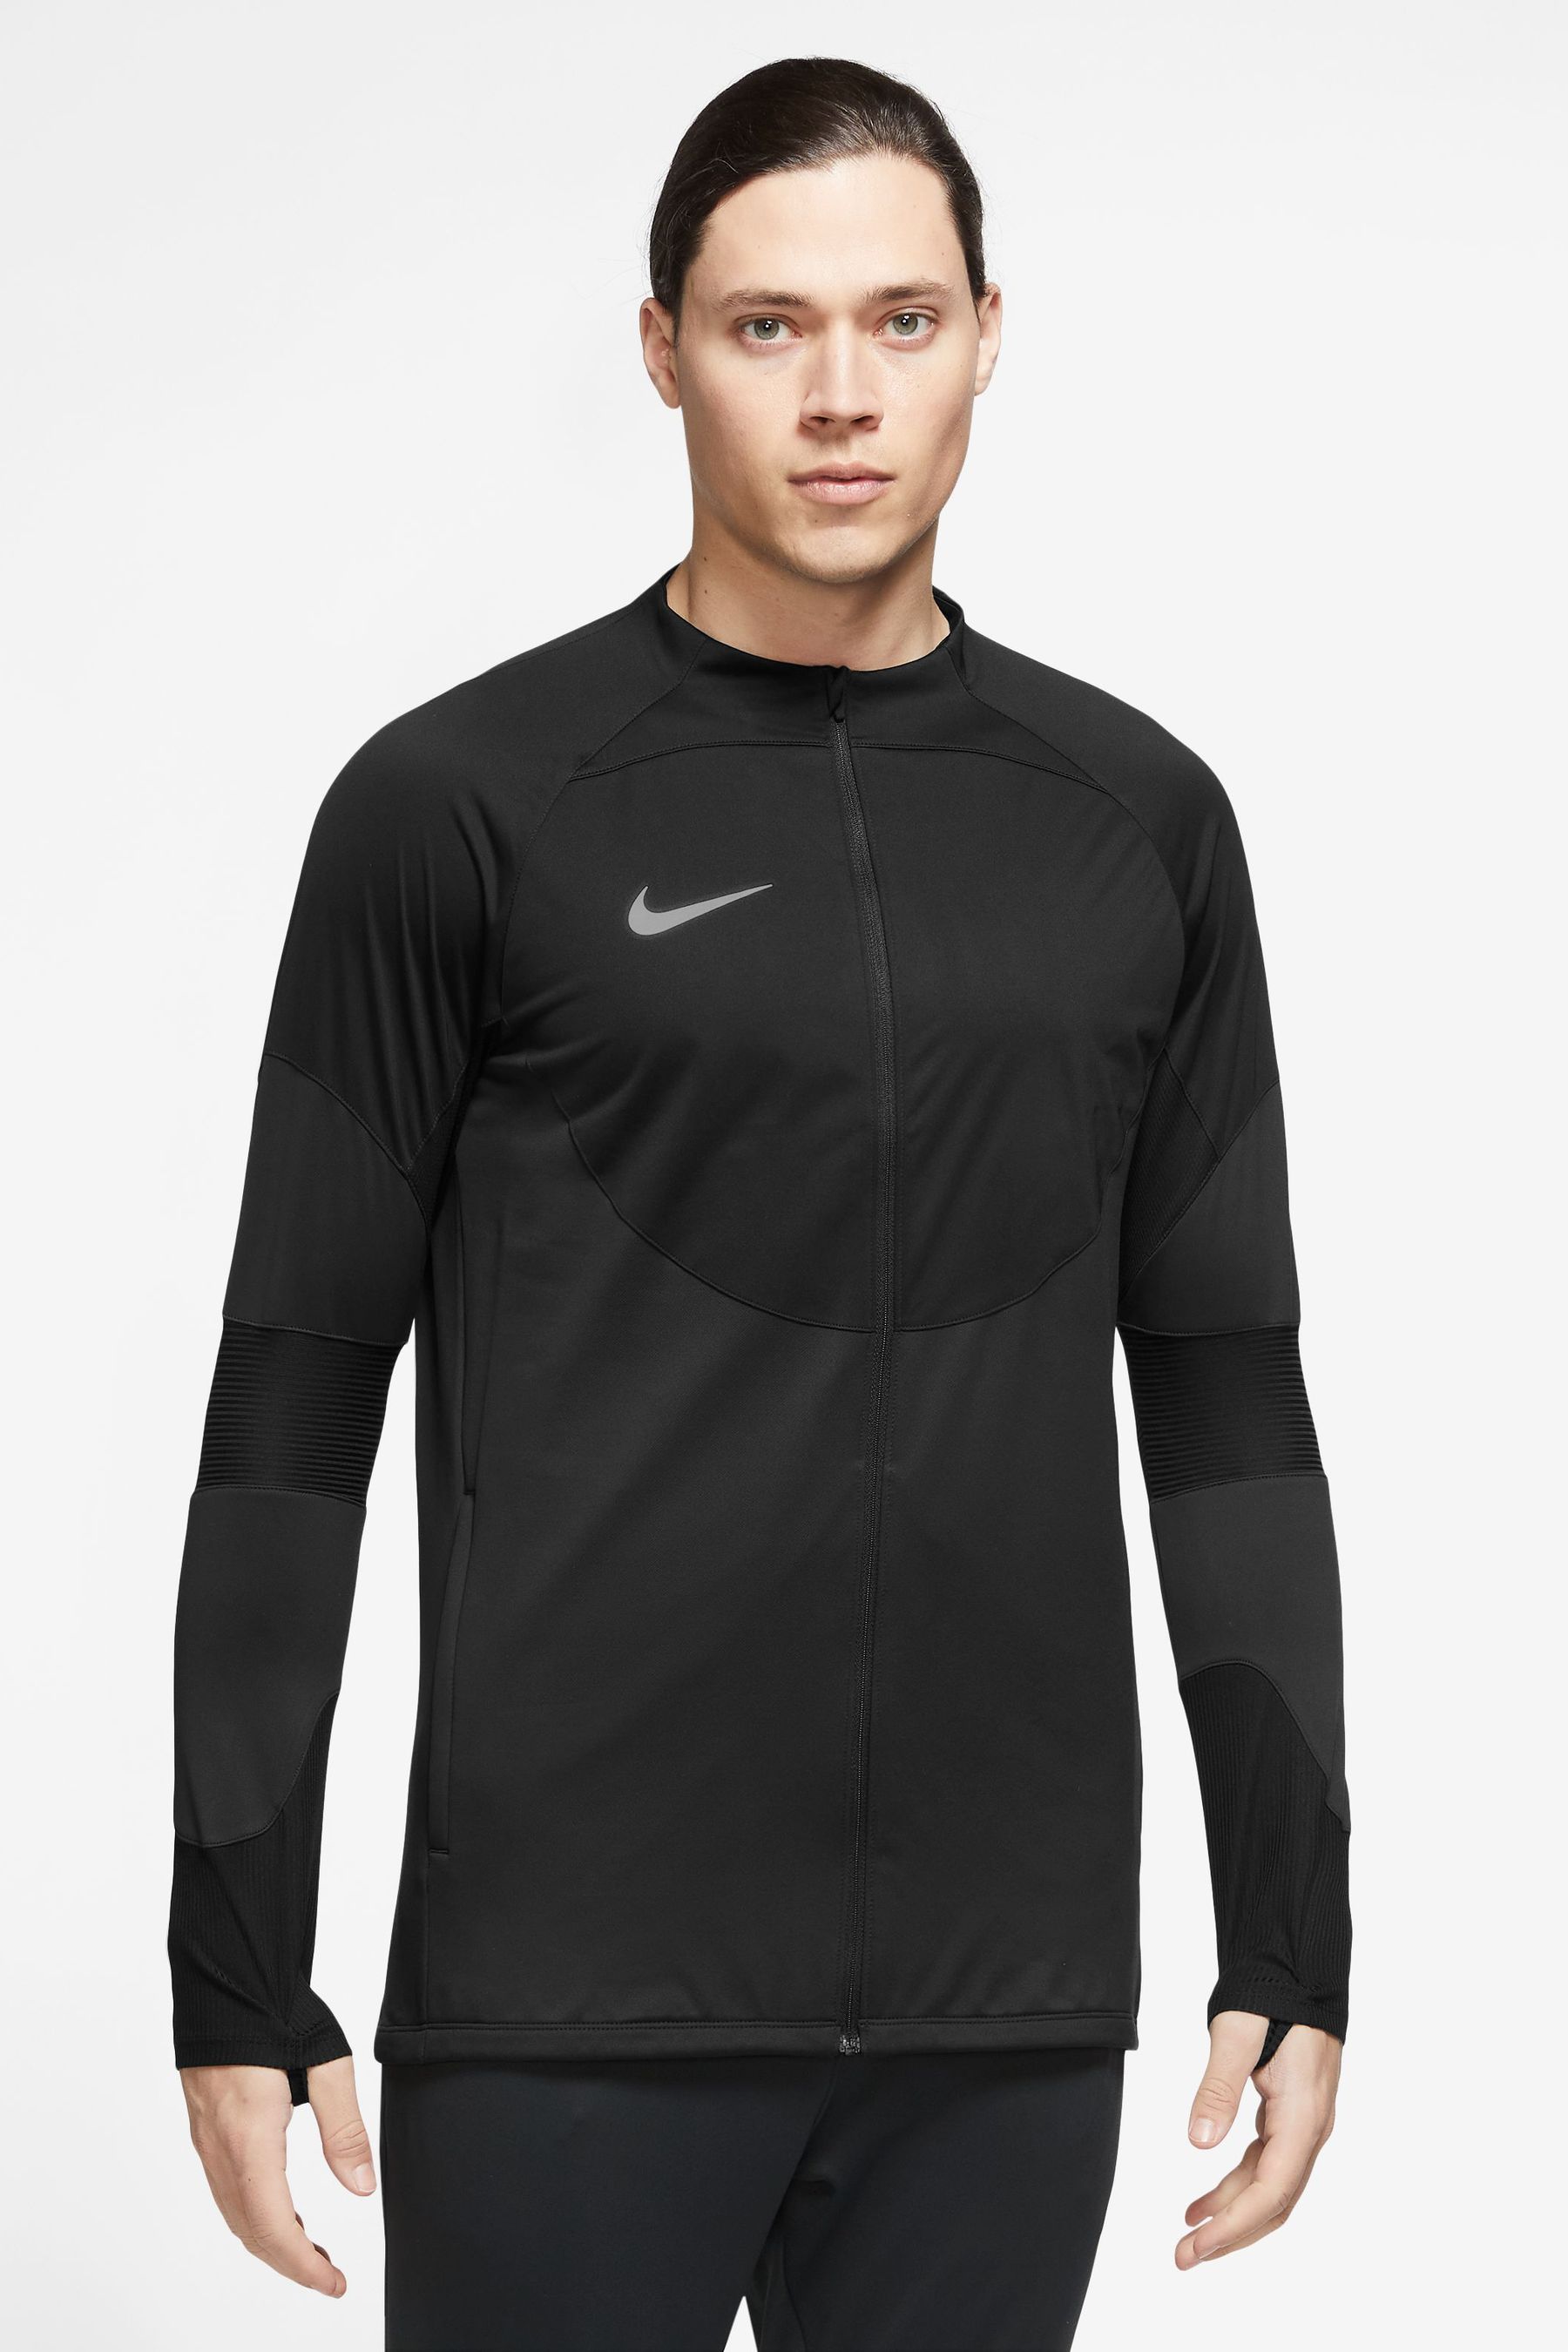 Зимняя футболка Therma-FIT Strike Warrior Nike, черный цена и фото